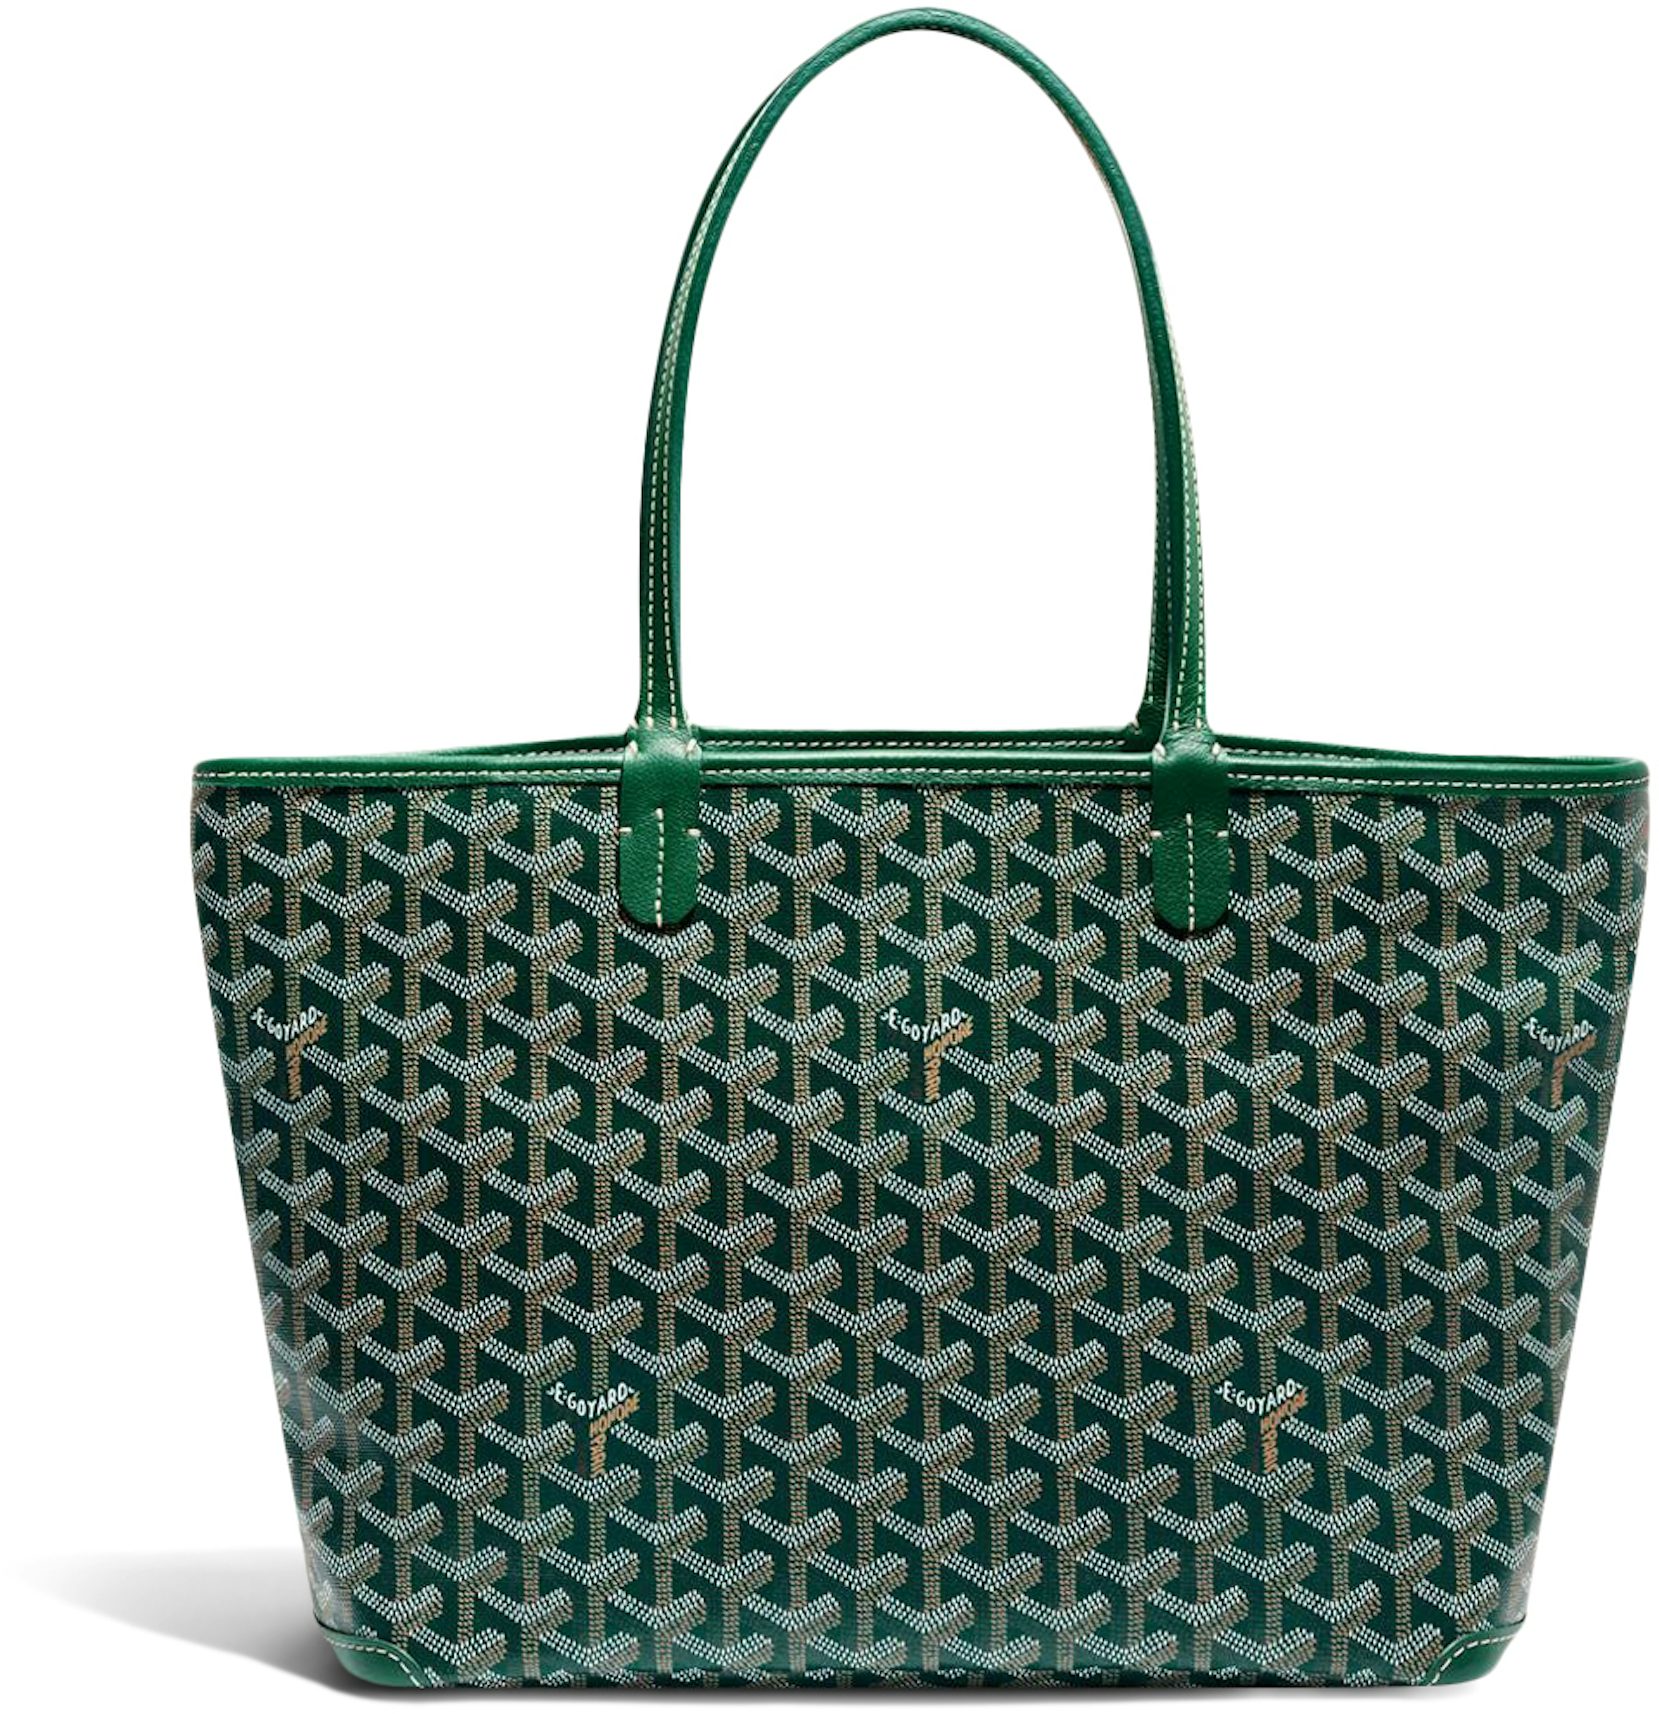 Green Goyard Medium Tote Bag Size PM 